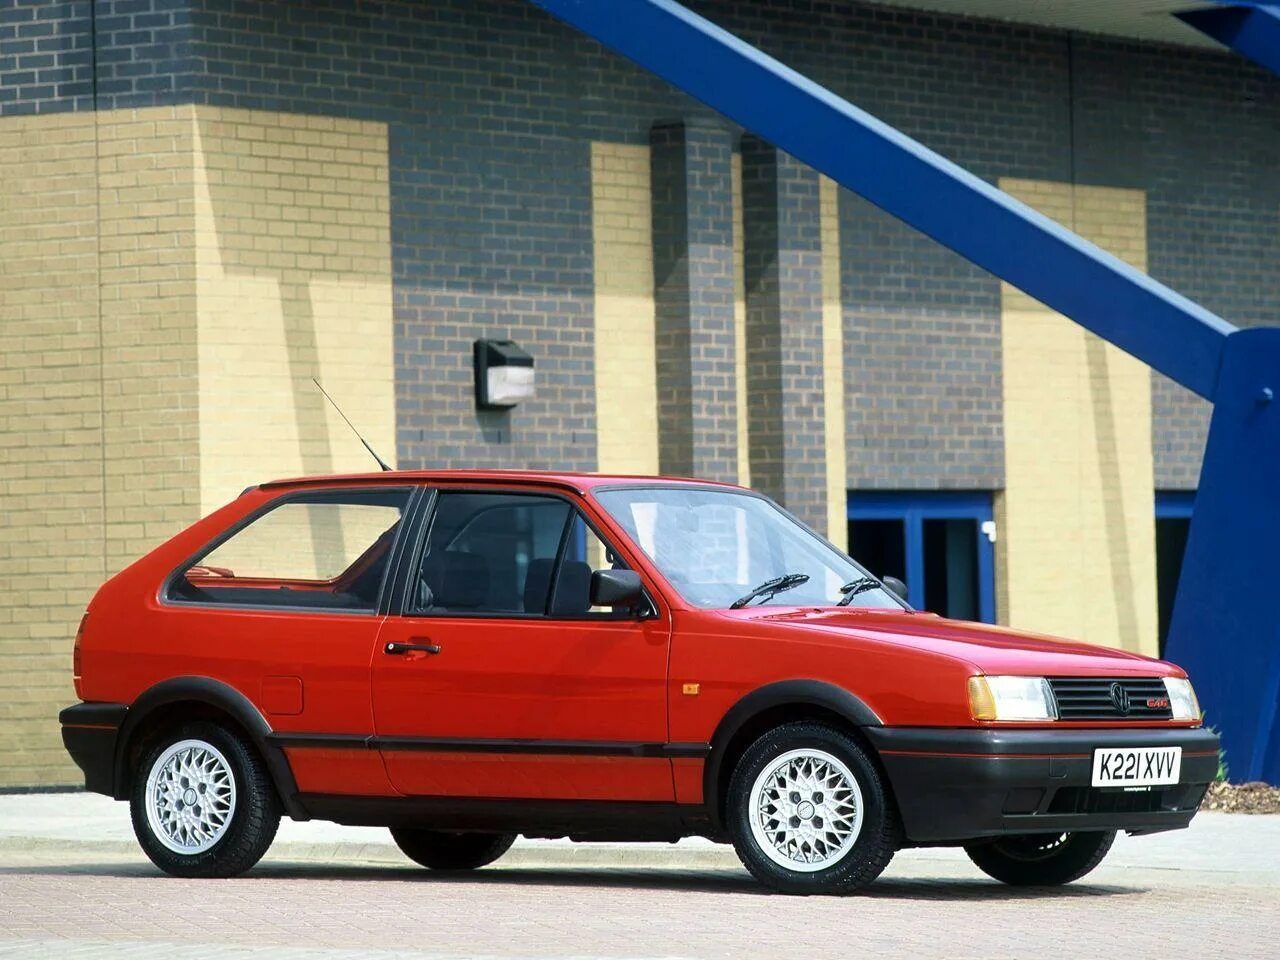 Vw polo 2. Volkswagen Polo 2 Coupe. VW Polo mk2. Volkswagen поло 1990. Фольксваген поло 1 поколение.